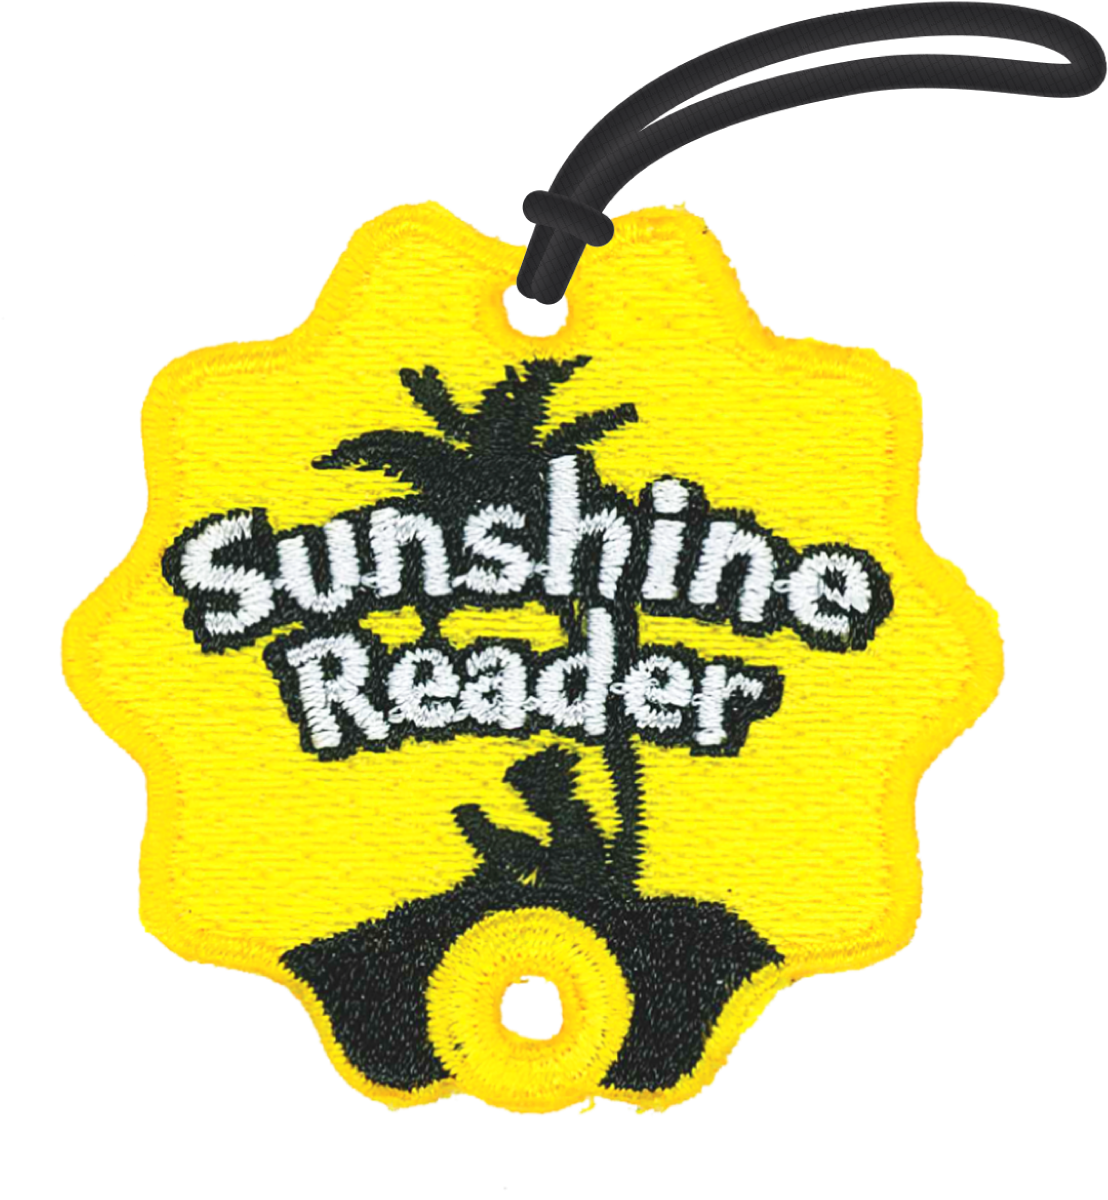 PATCH Tag - Sunshine Reader